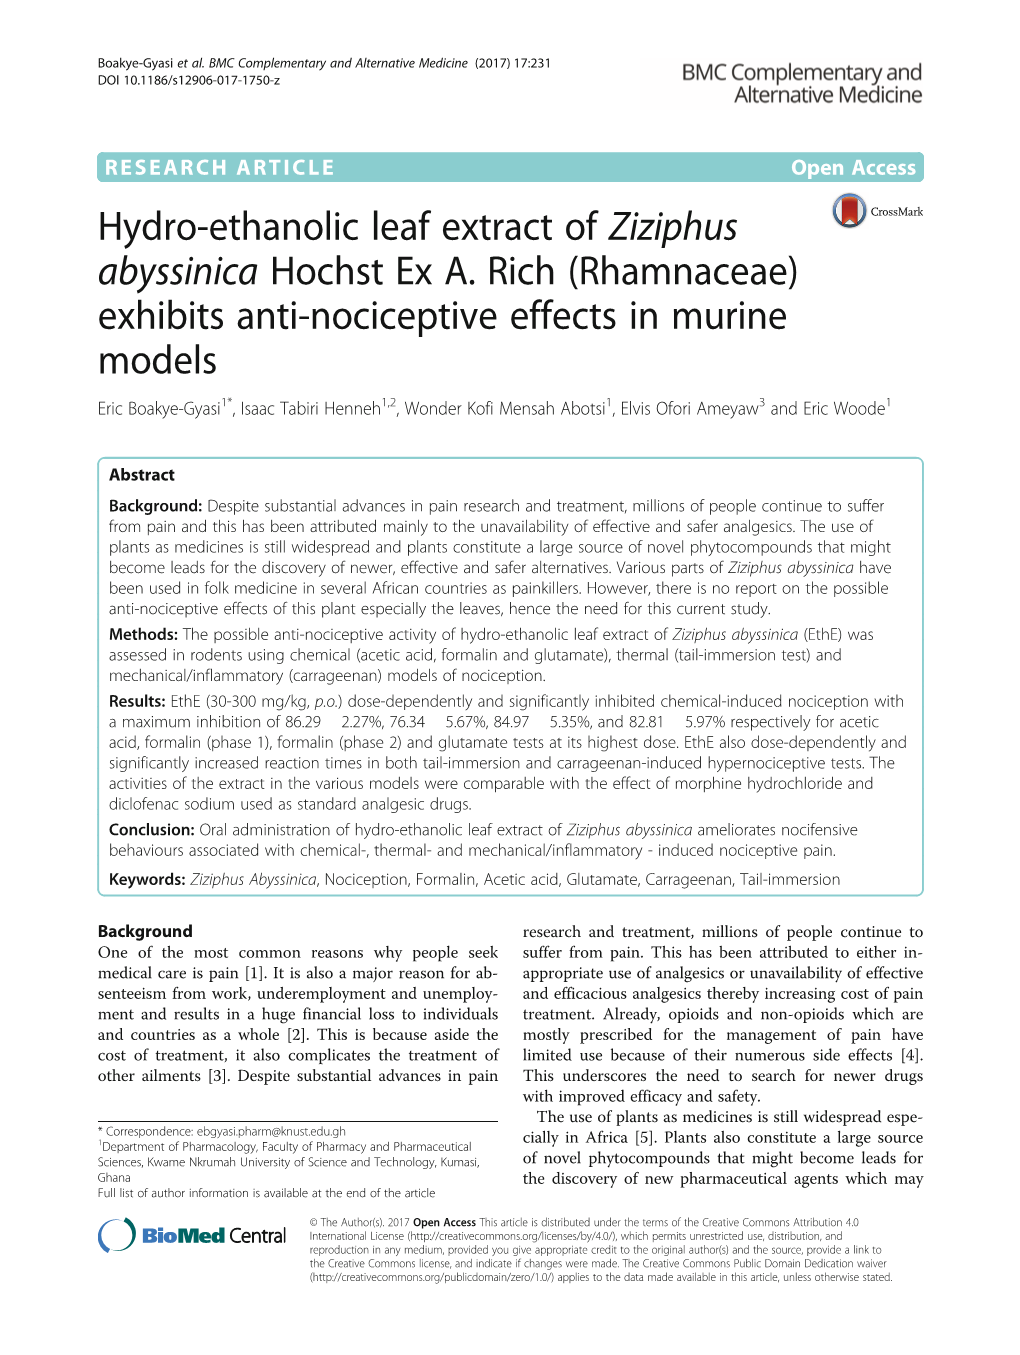 Hydro-Ethanolic Leaf Extract of Ziziphus Abyssinica Hochst Ex A. Rich